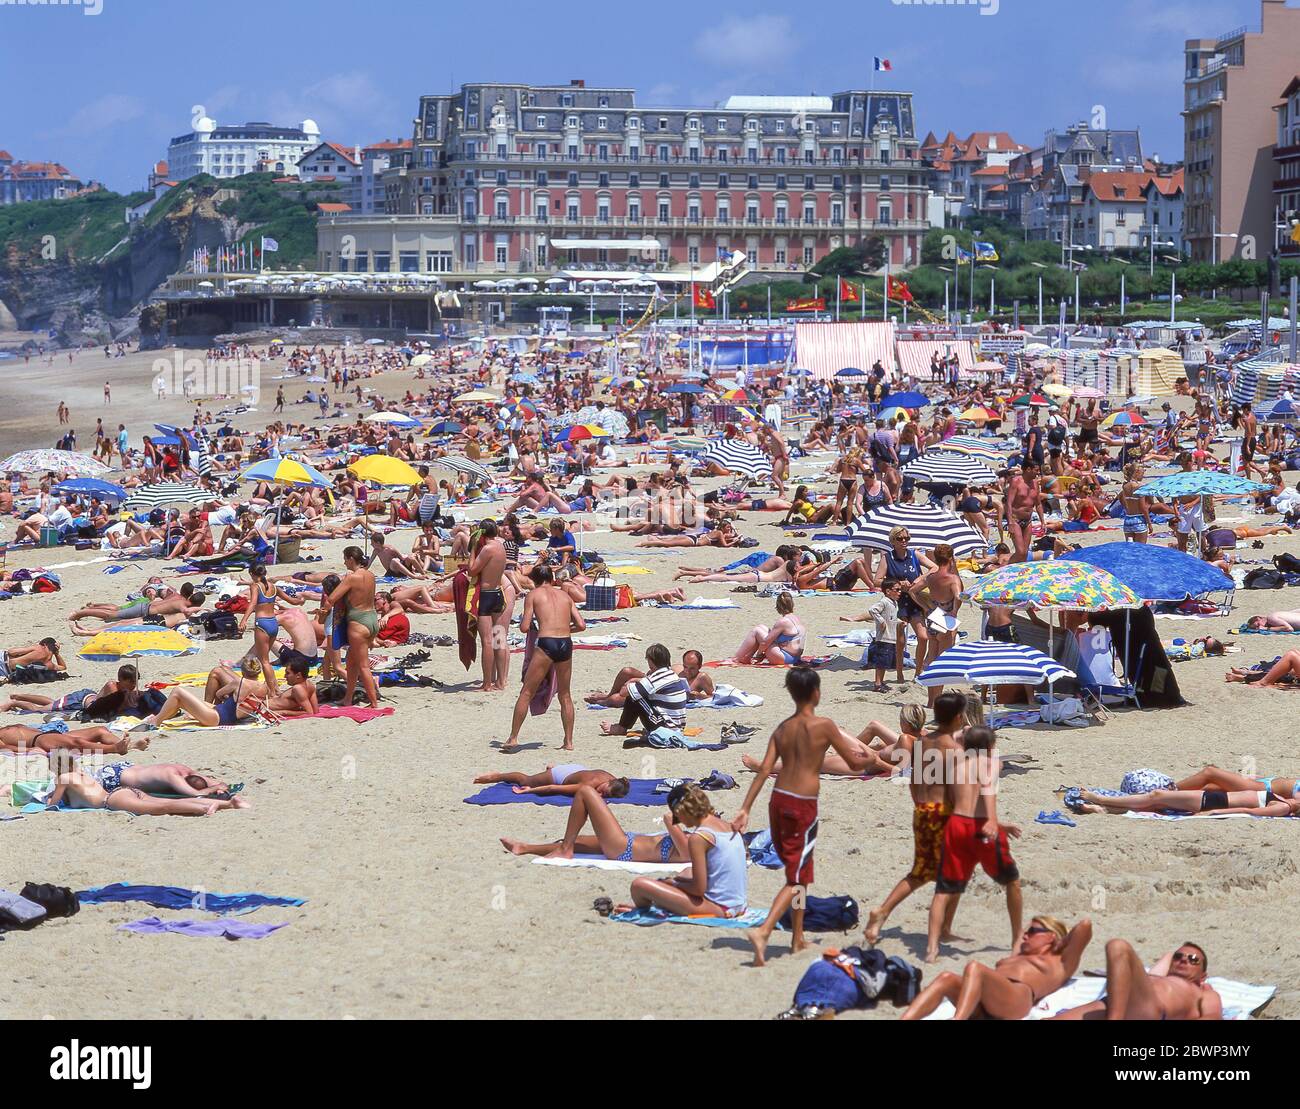 Überfüllter Strand, Plage Miramar, Biarritz (Miarritze), Pyrénées-Atlantiques, Nouvelle-Aquitaine, Frankreich Stockfoto